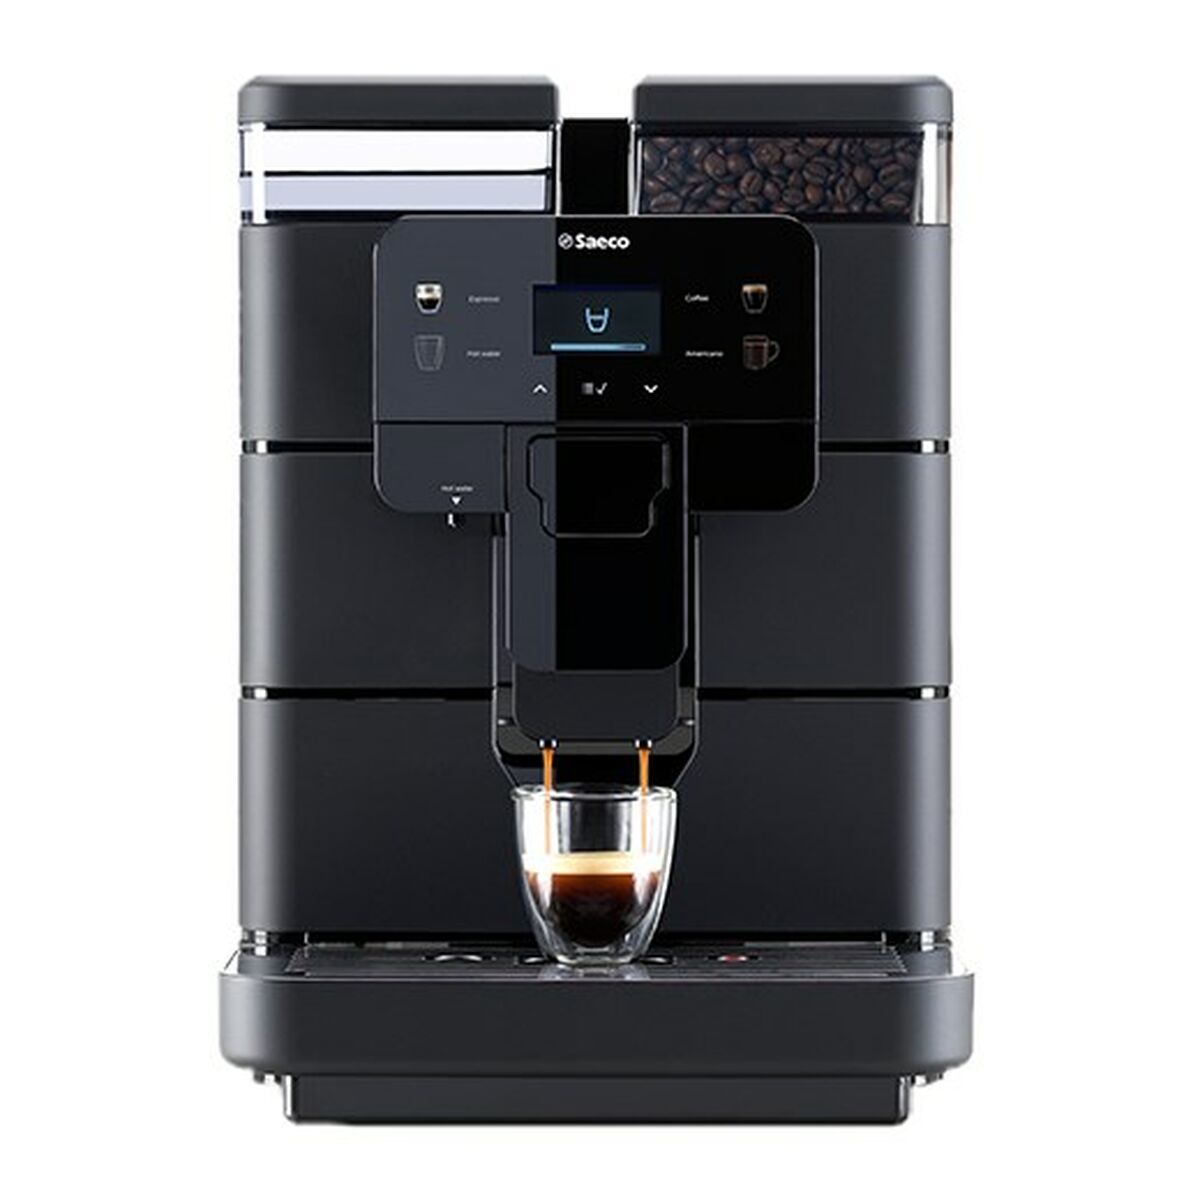 Express-Kaffeemaschine Saeco 9J0040 1400 W 2,5 L 2 Kopper - CA International 